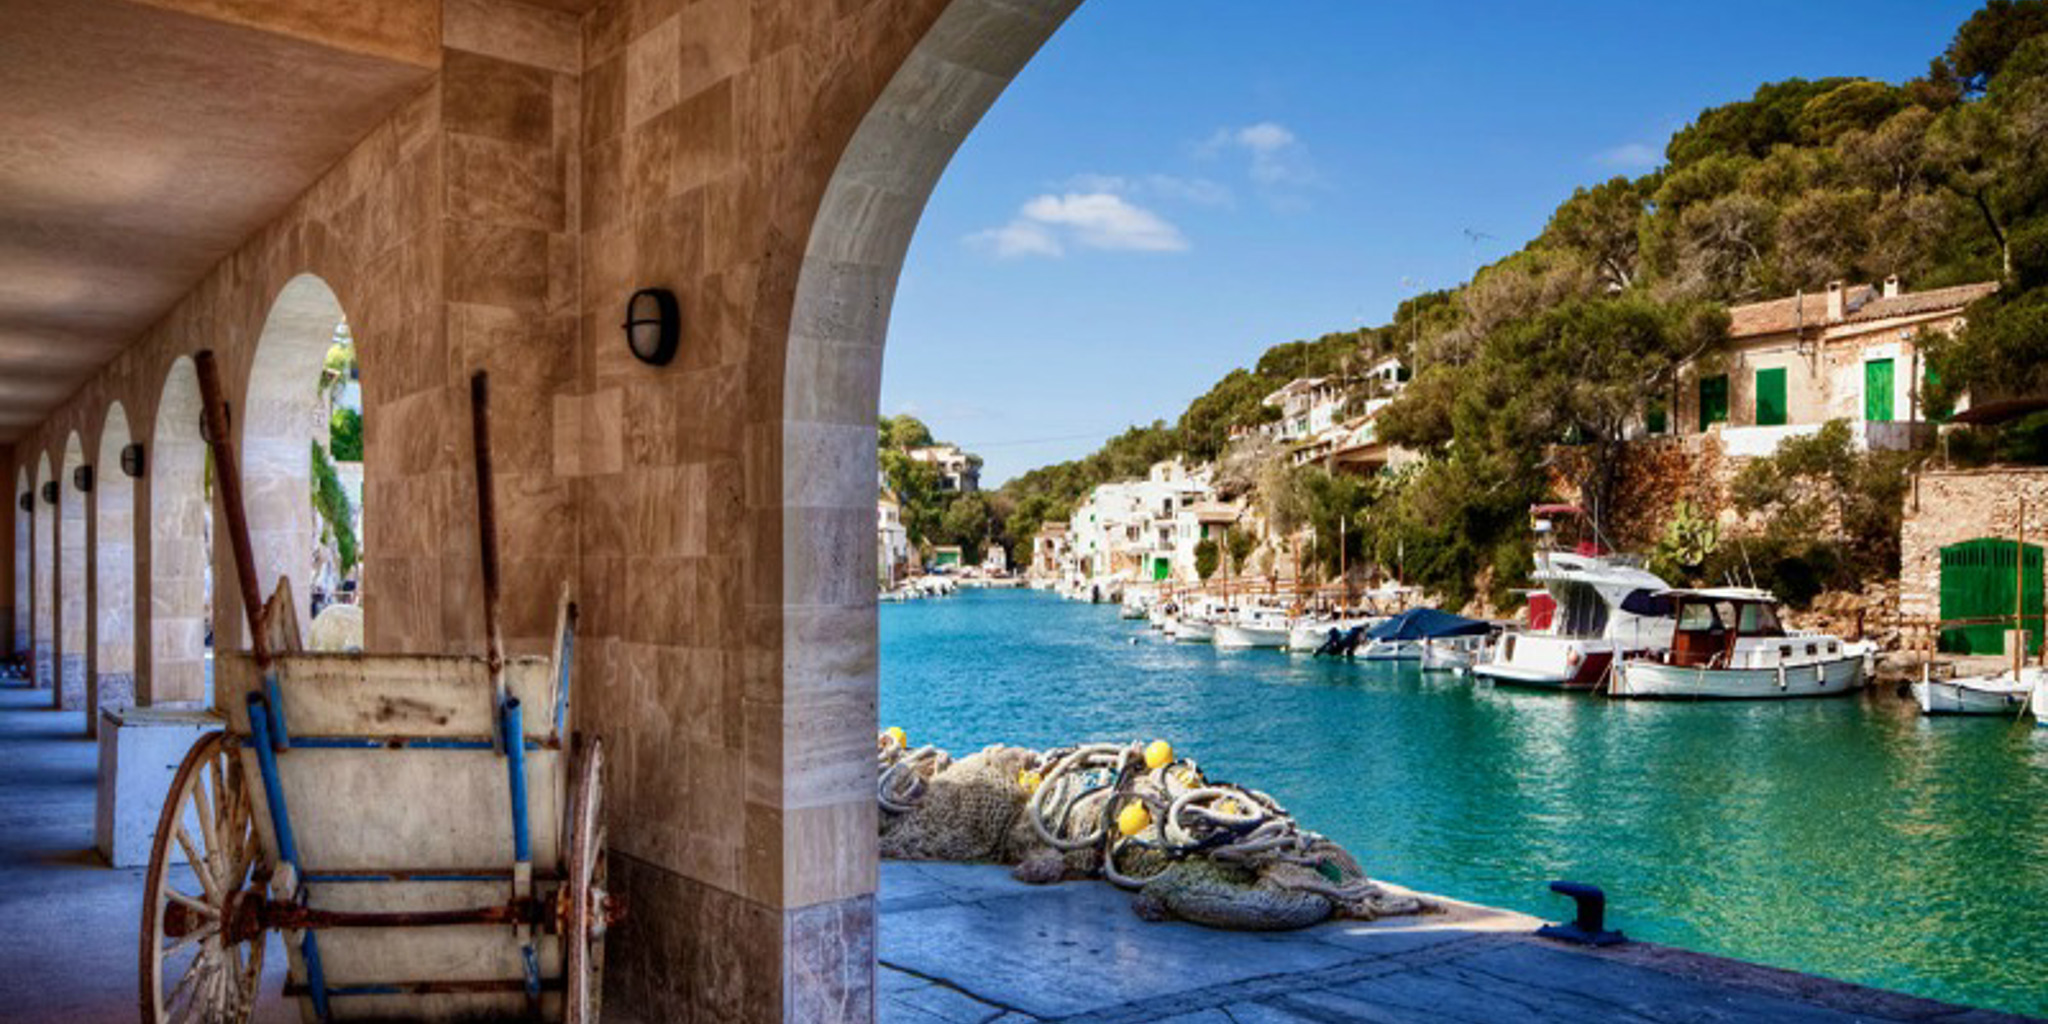 Balearic authorities adopt new legislation for tourism developments